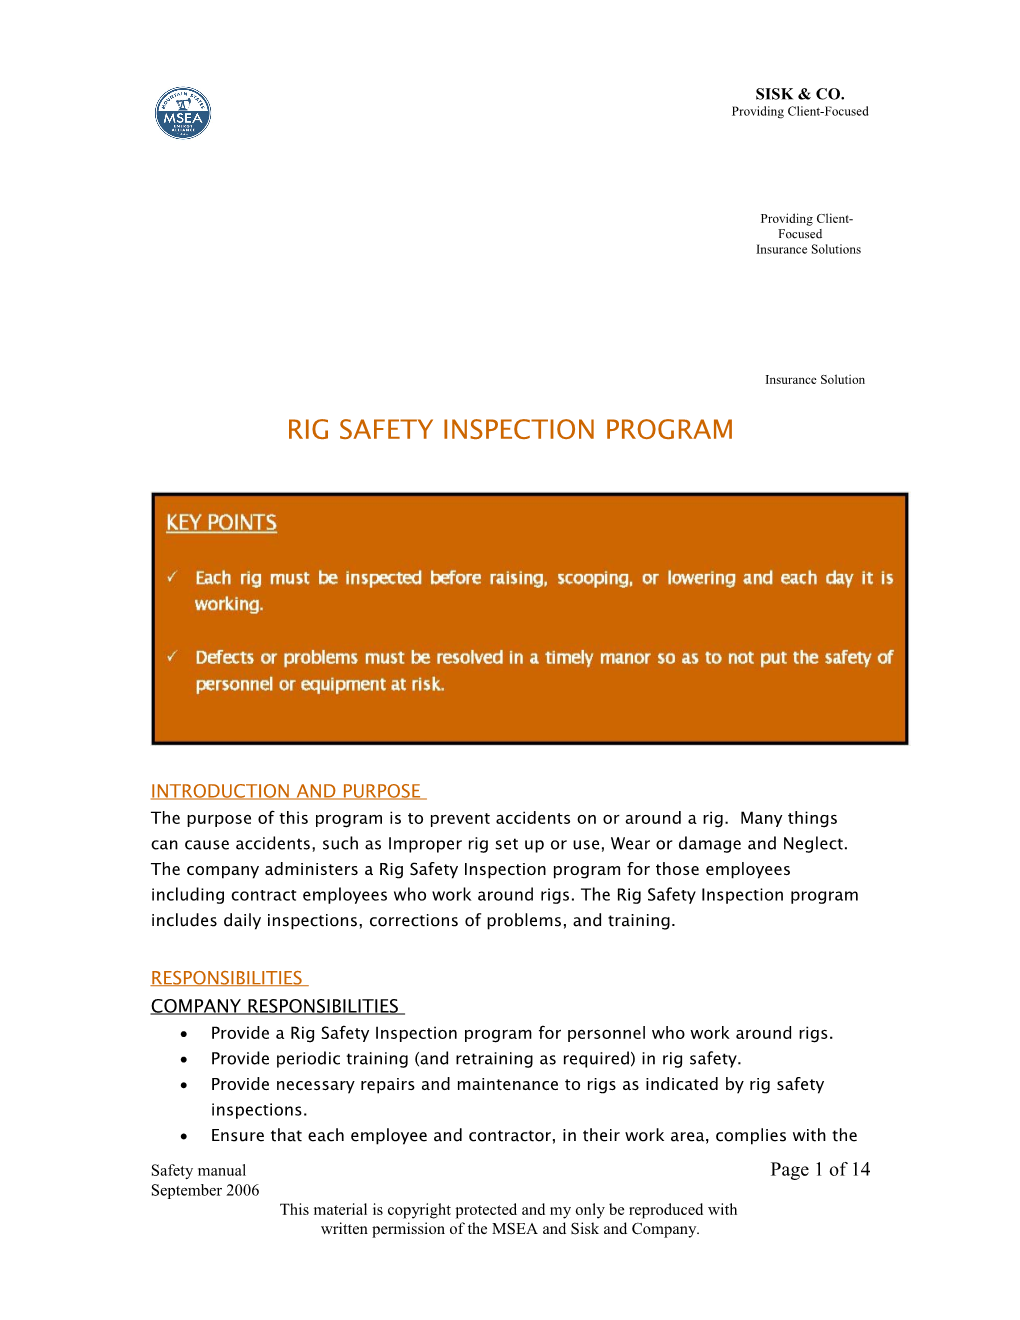 Rig Safety Inspection Program